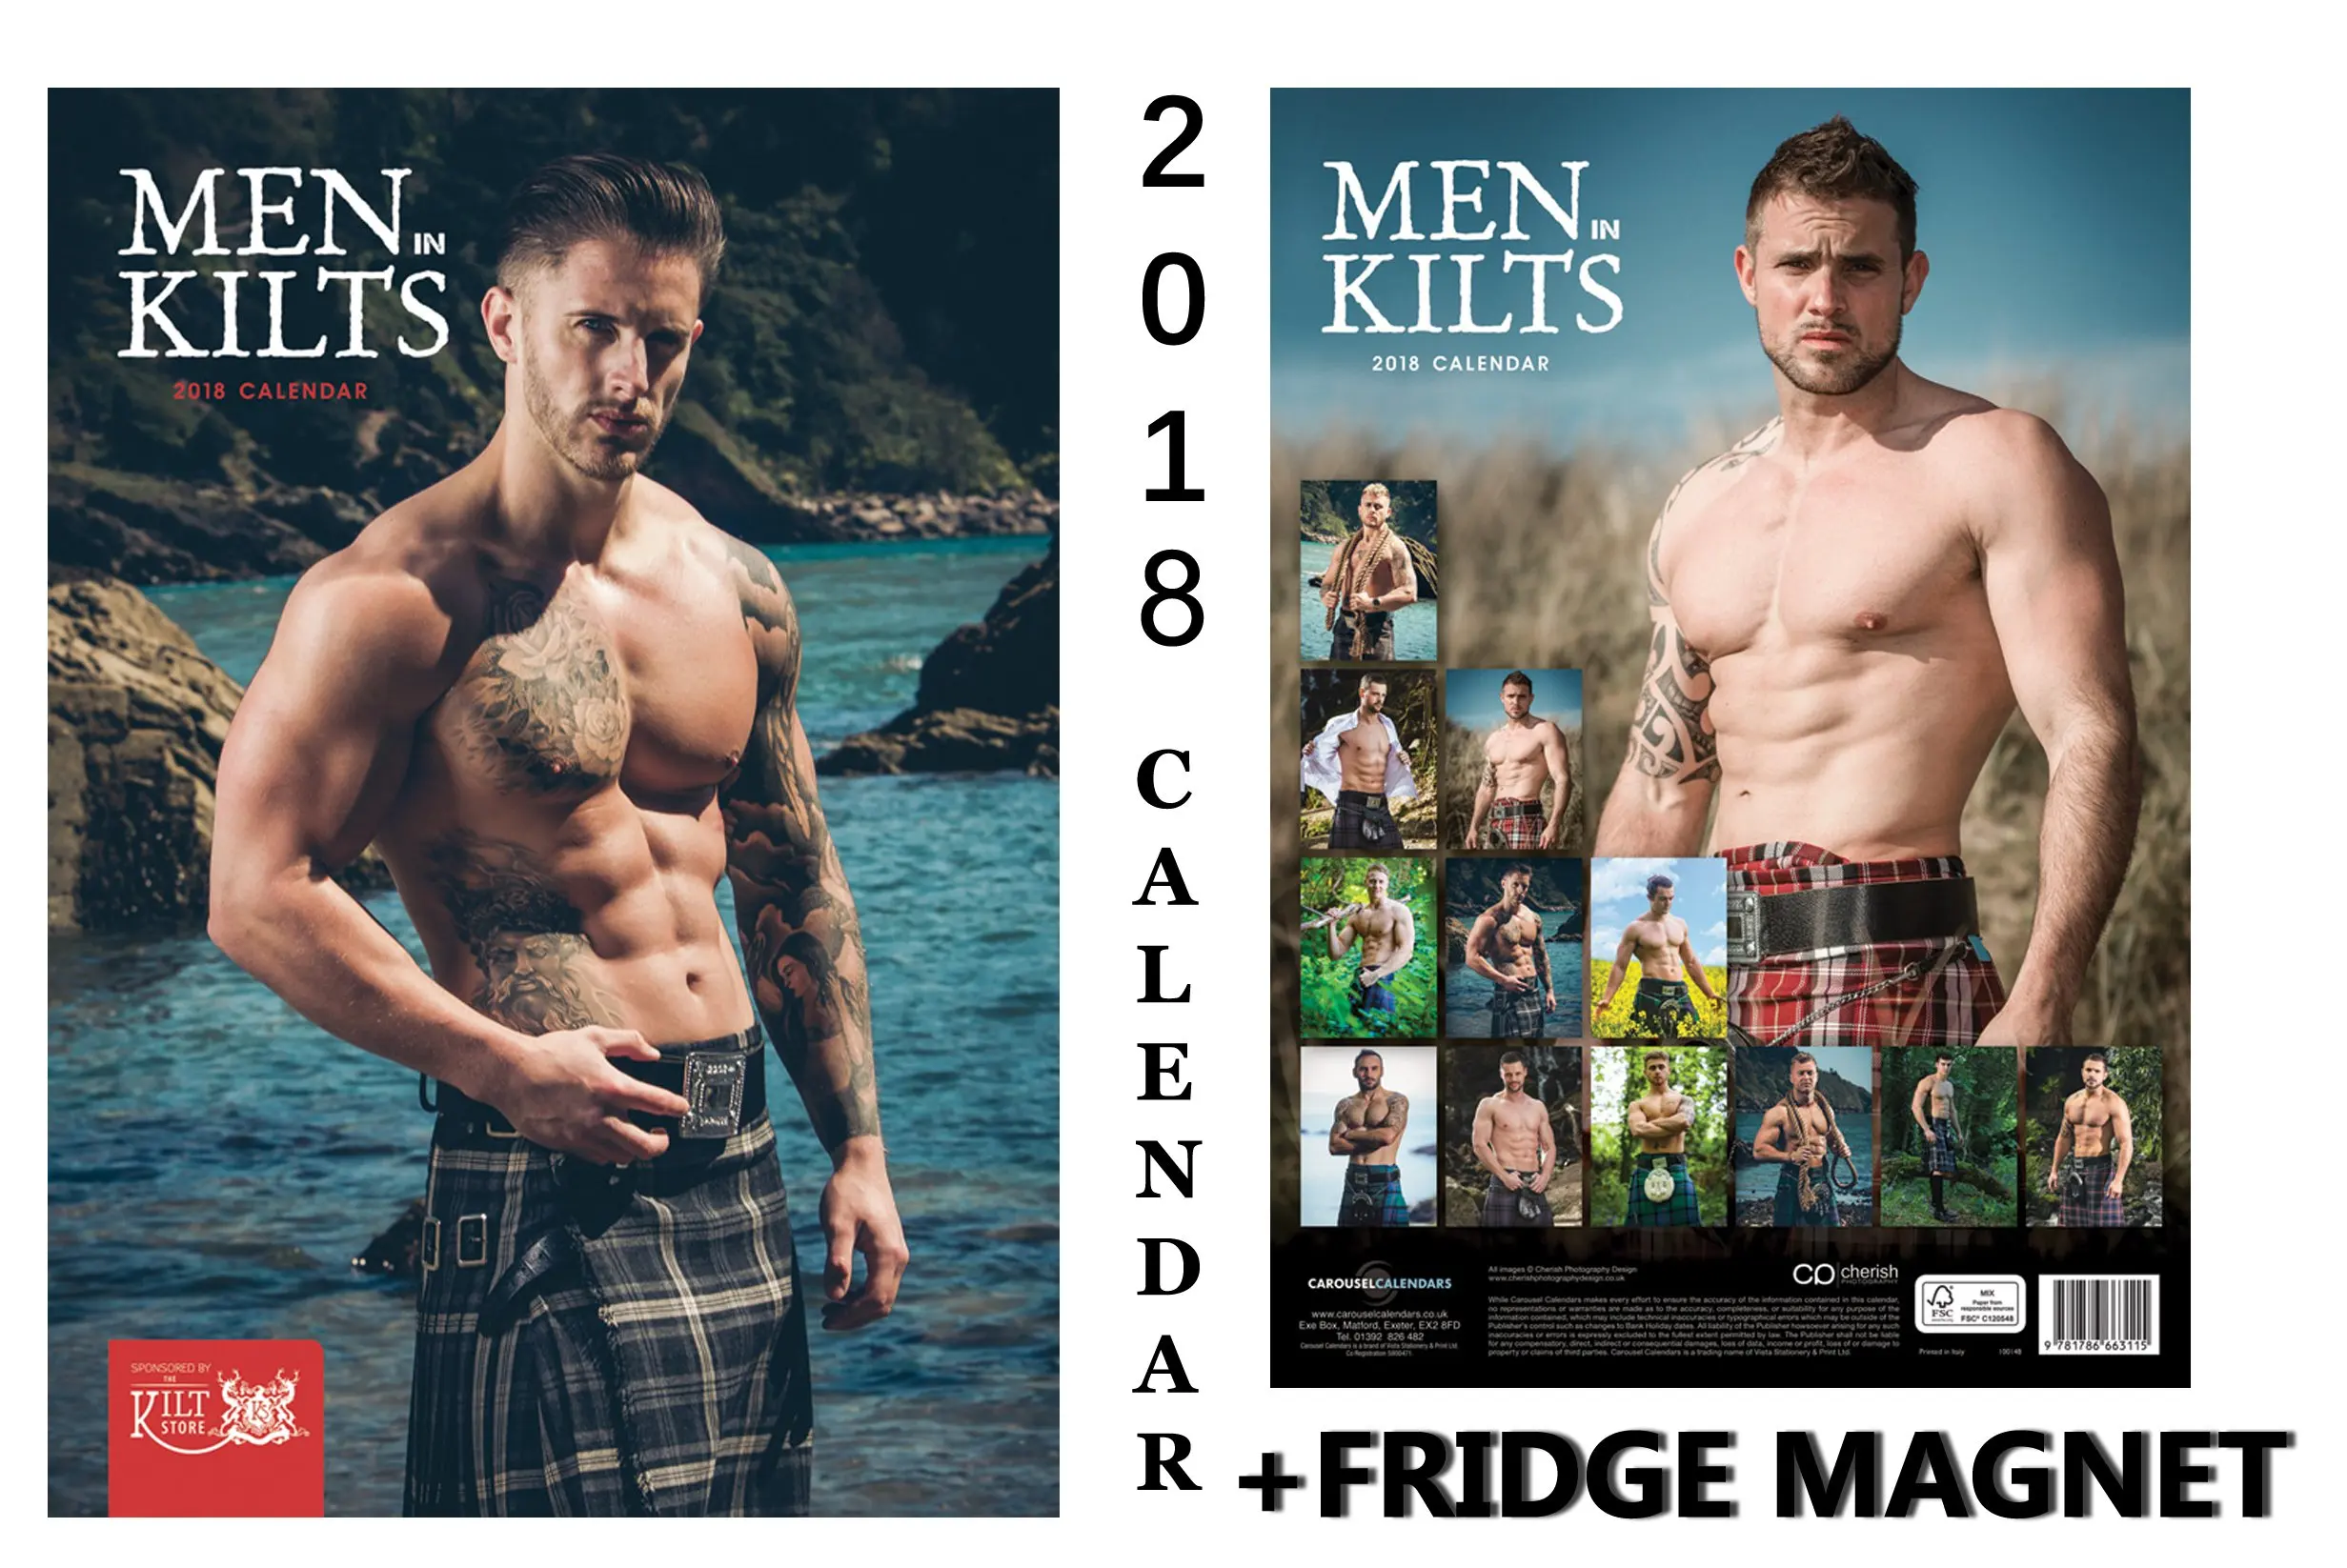 Men in kilts A3 calendar 2018 + men in kilts fridge magnet.